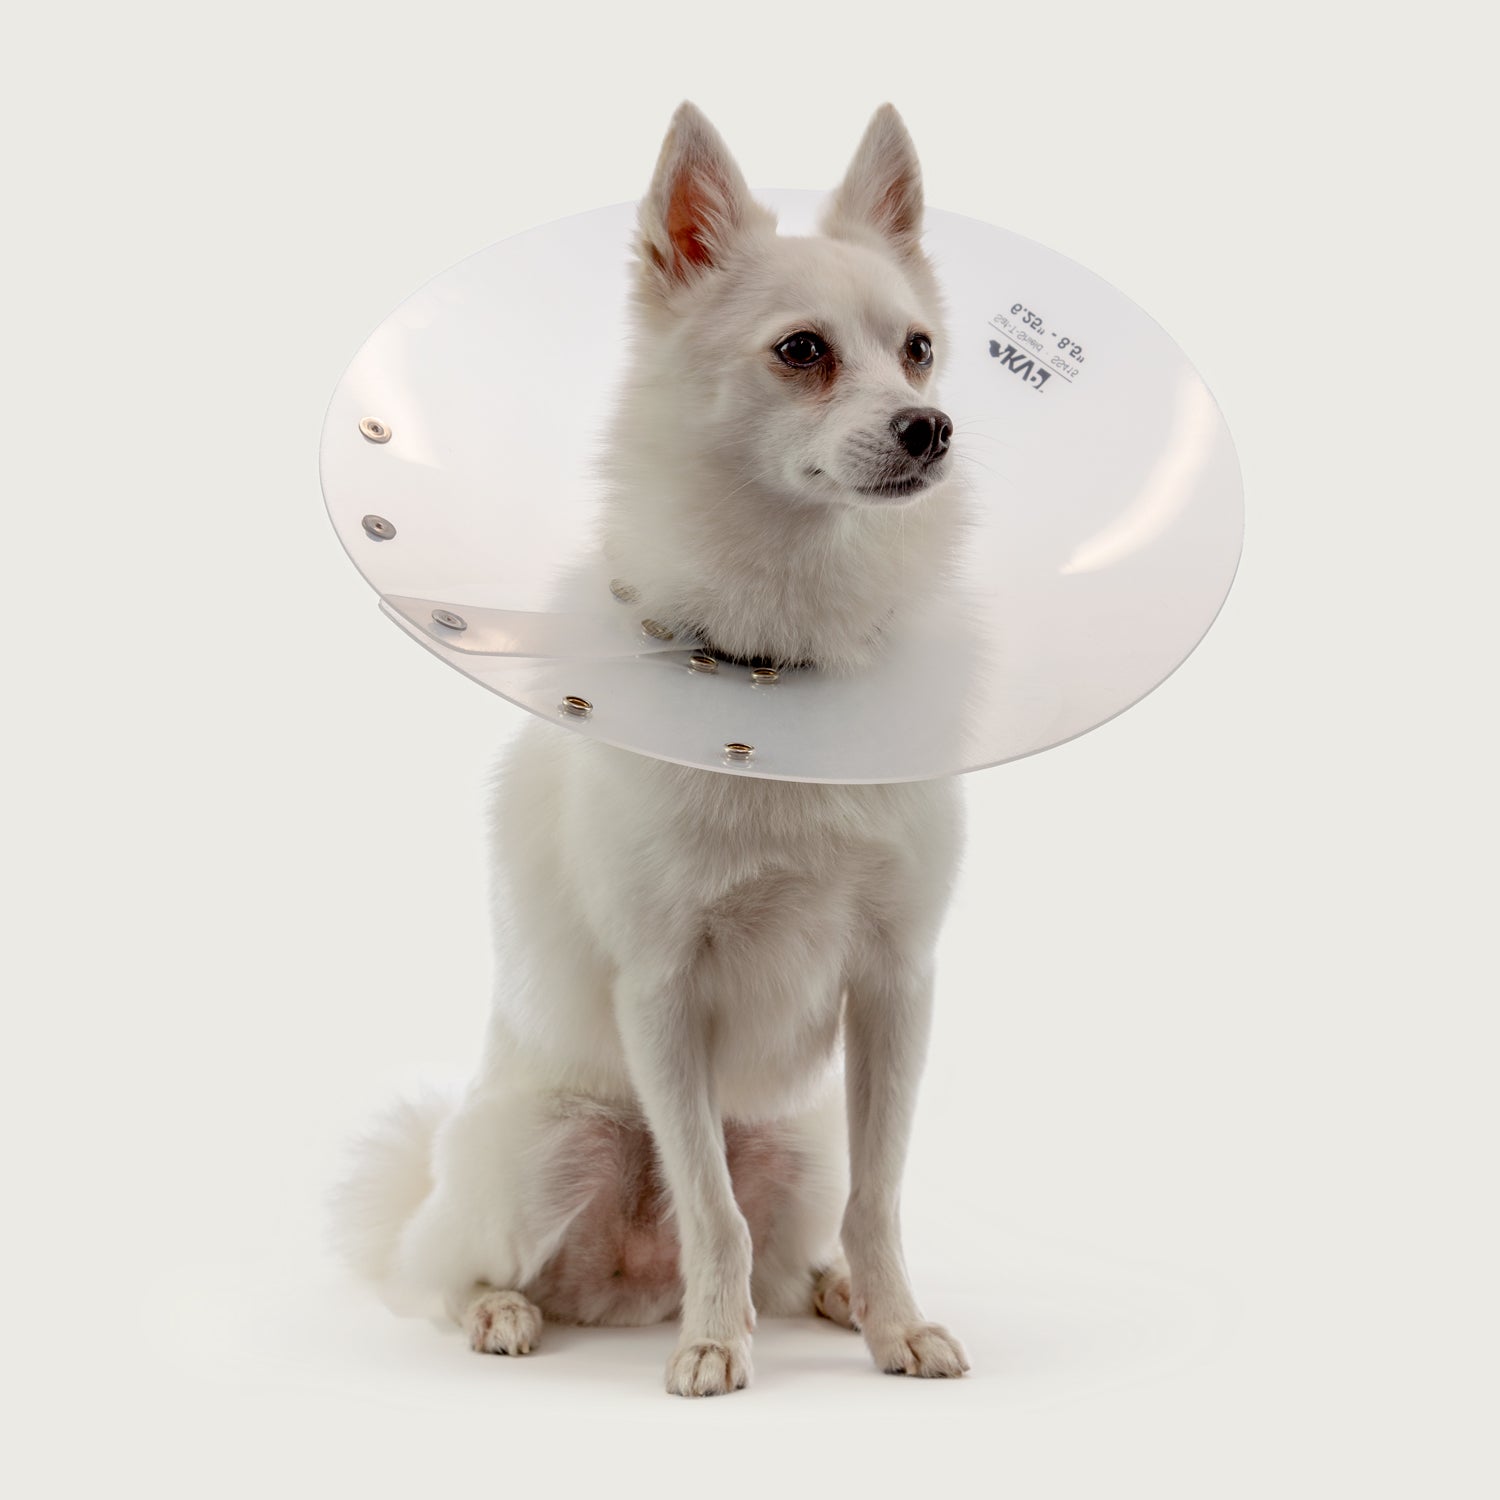 saf-t-shield e collar for dog from kvp